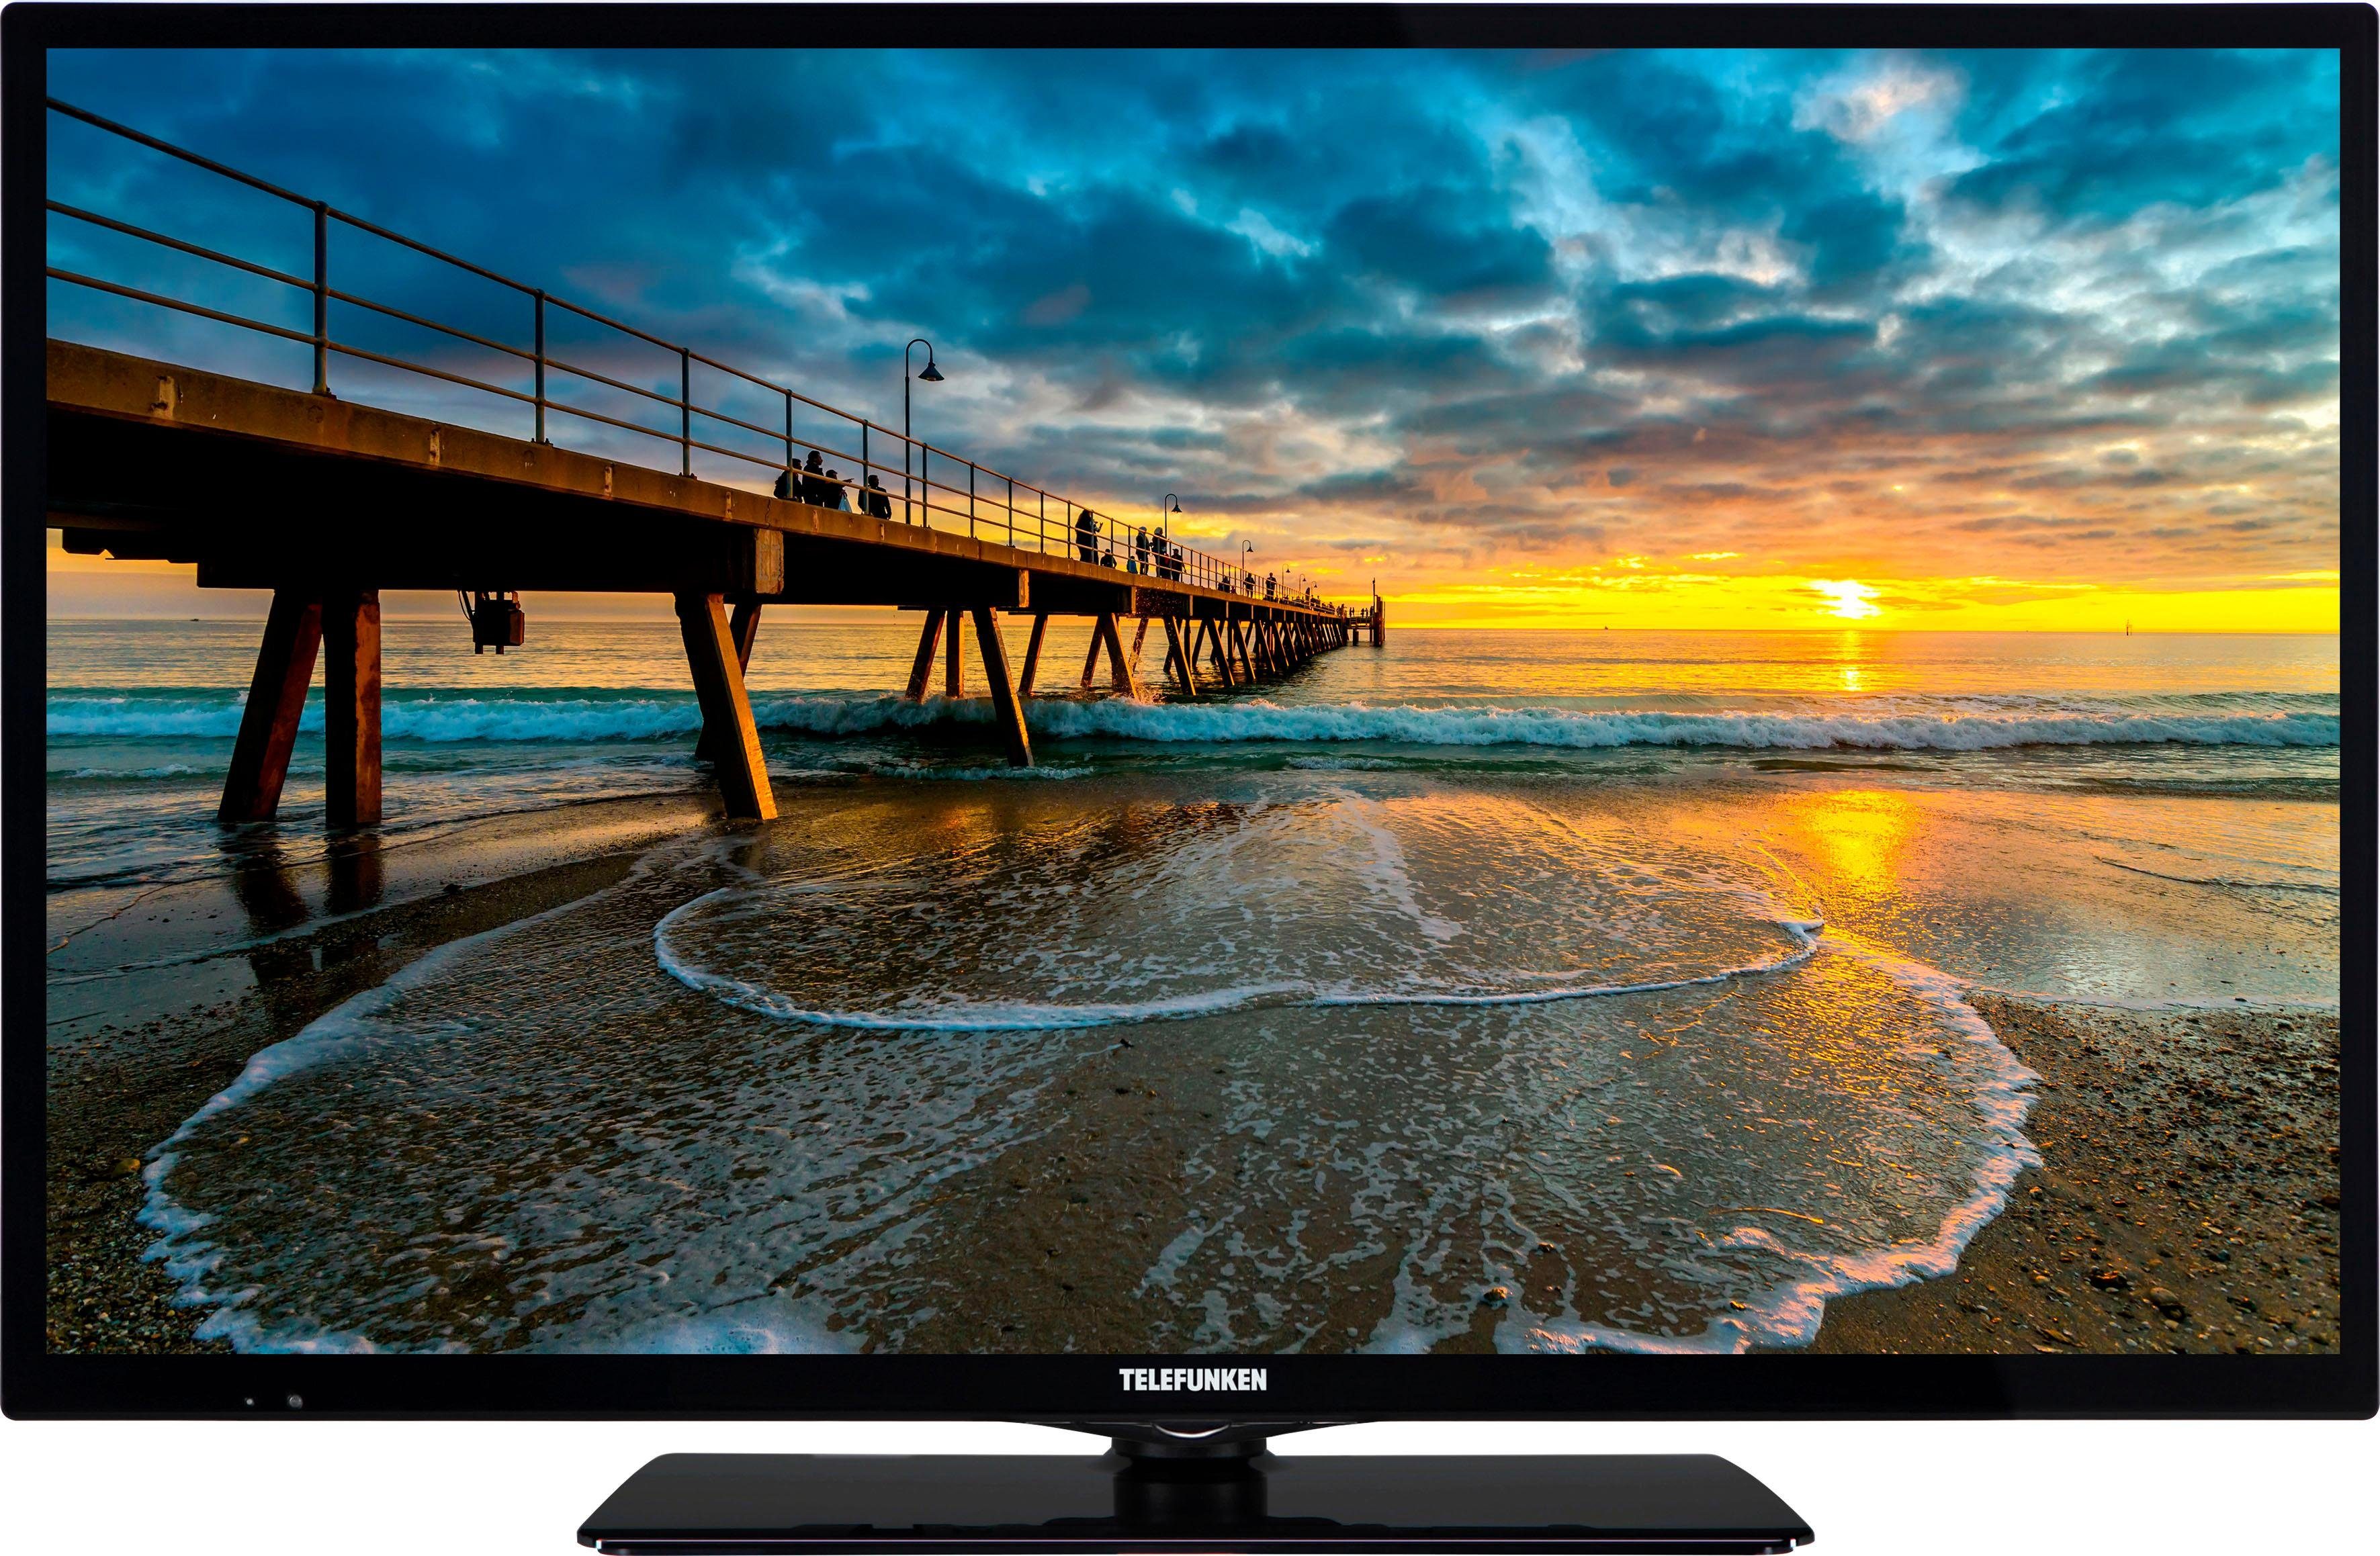 Telefunken D32f289m4cw Led Fernseher 80 Cm 32 Zoll Full Hd Smart Tv Online Kaufen Otto